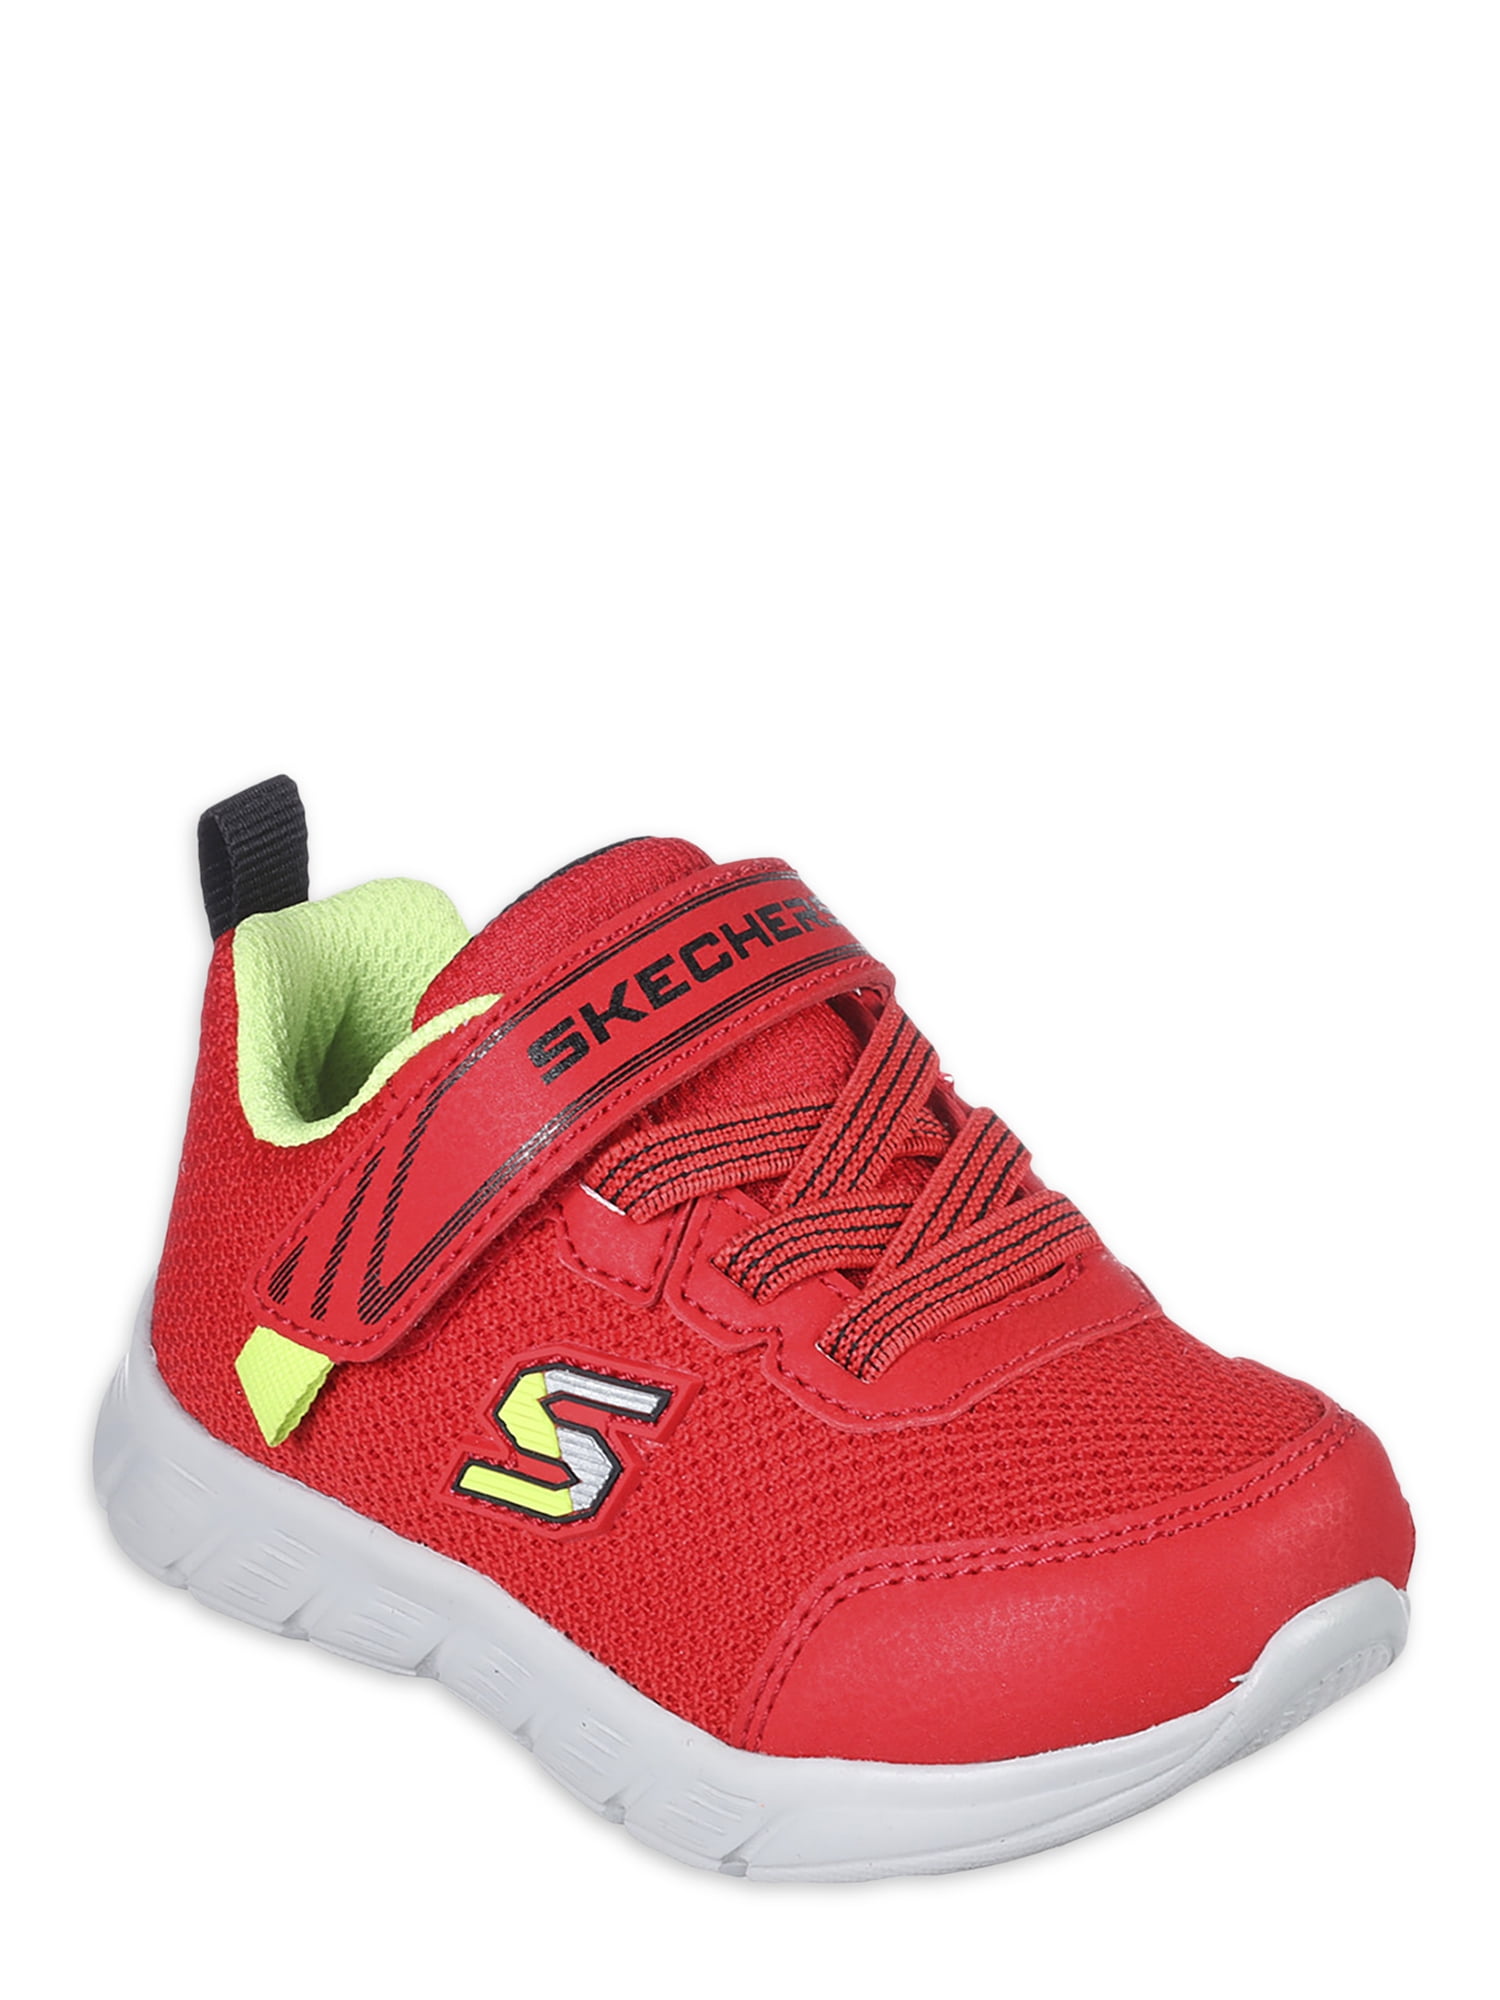 Boys Toddler Flex - Trainer Athletic Sneaker, Sizes 4-12 - Walmart.com